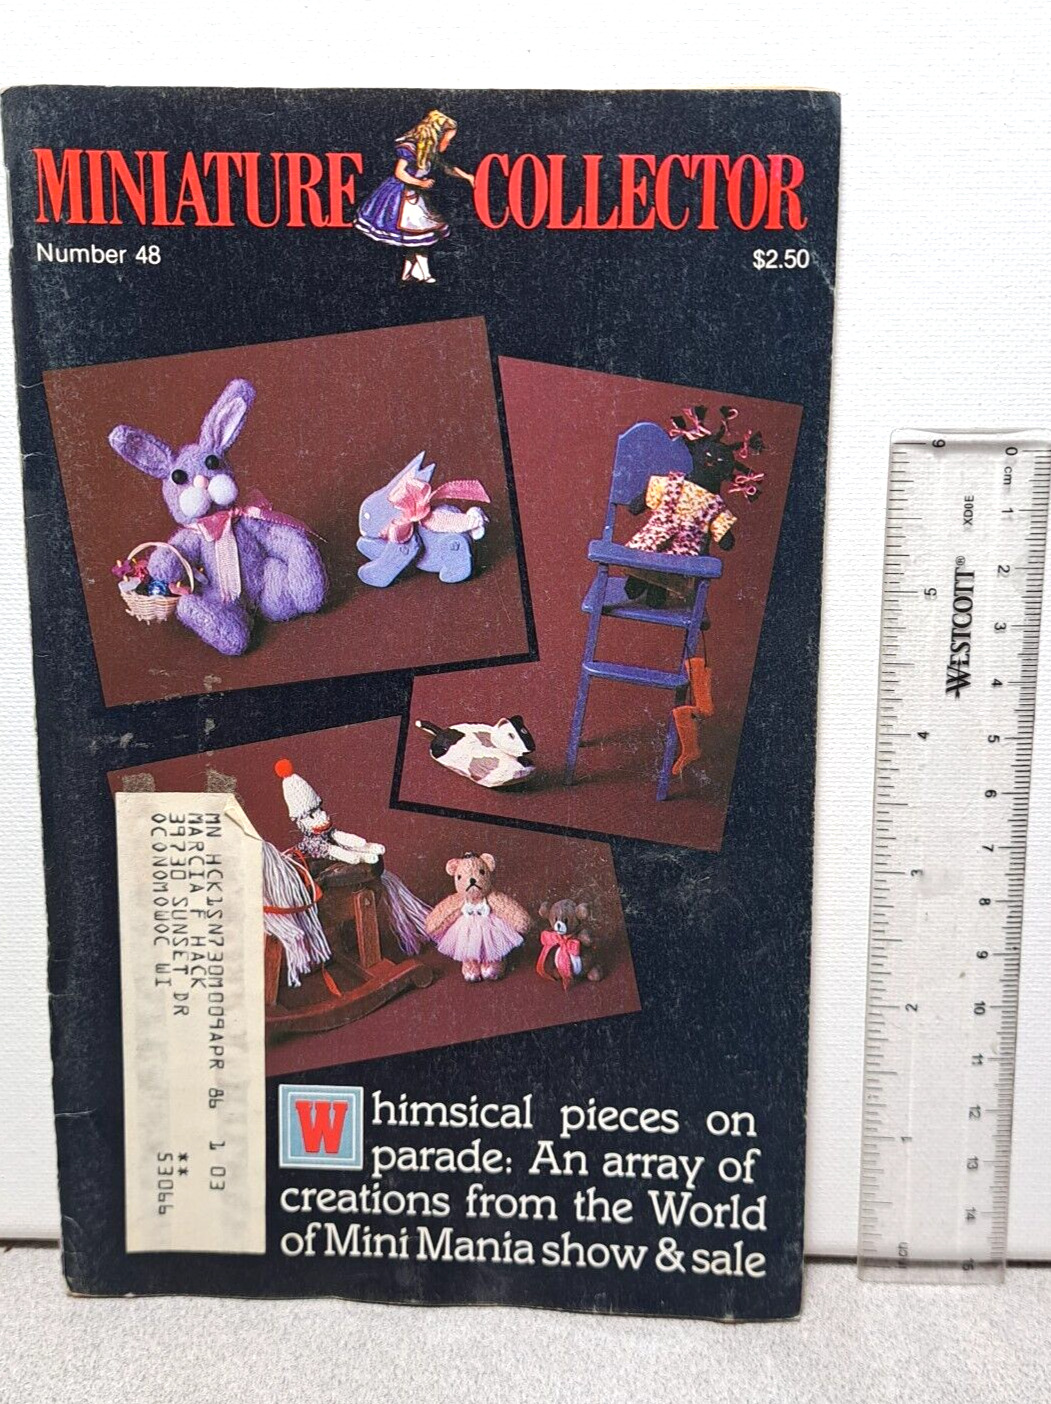 Vintage Miniature Collector Number 48 March/april 1985